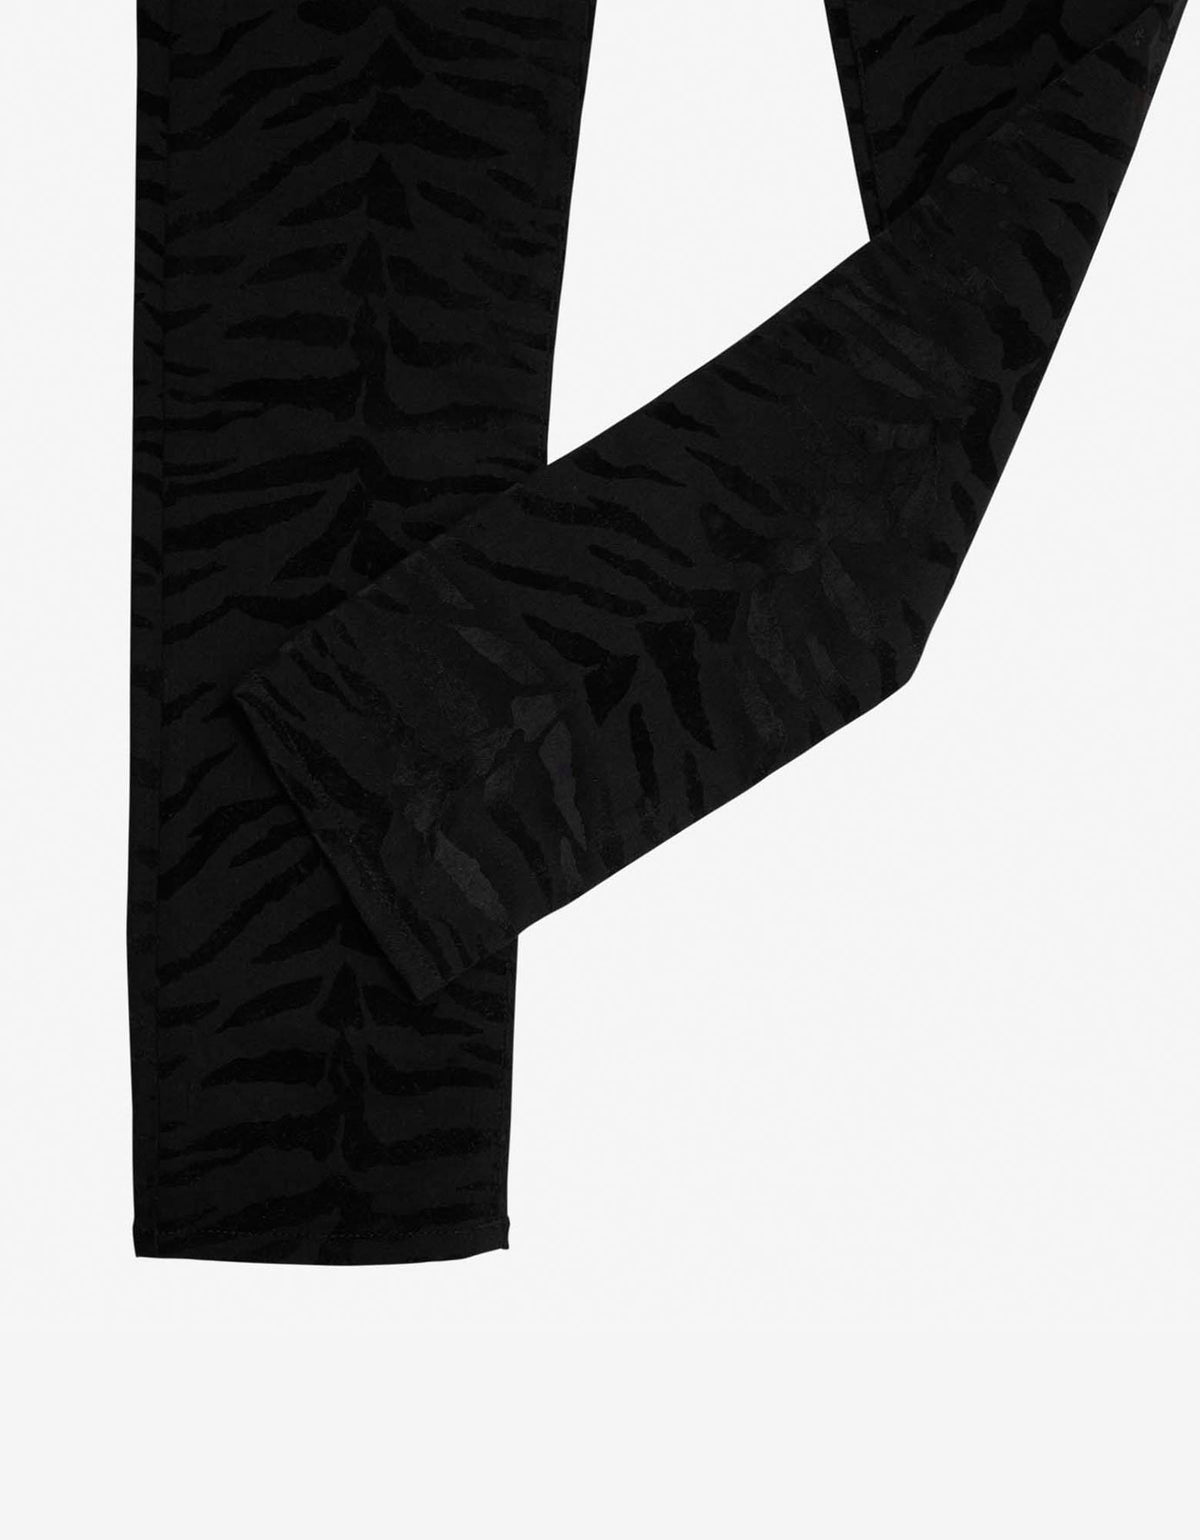 Saint Laurent Black Zebra Print Skinny Jeans